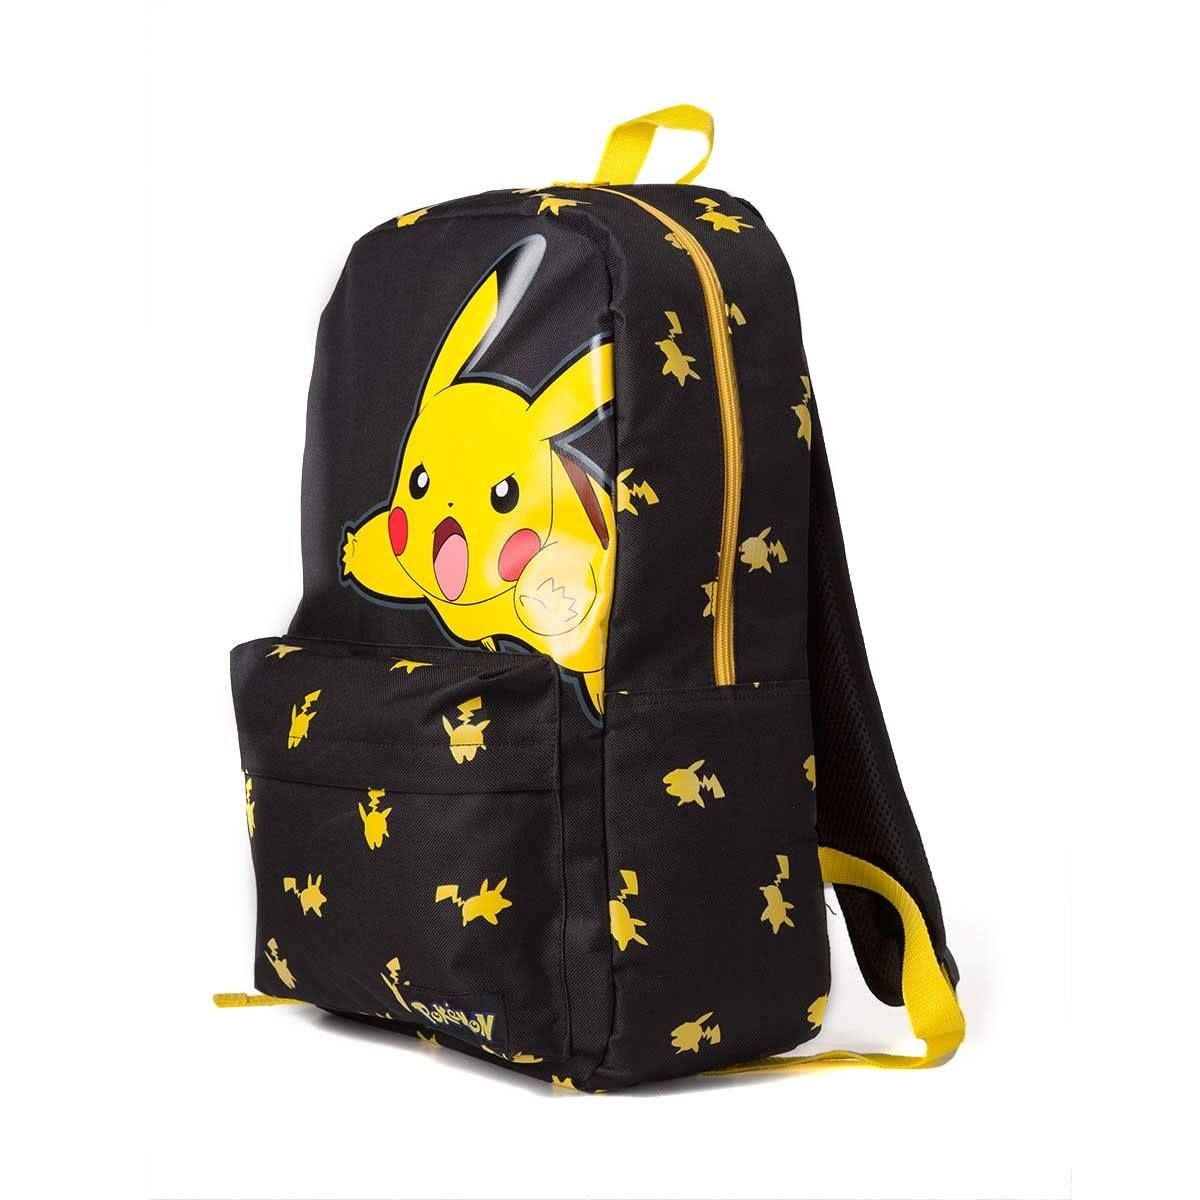 Sac à dos noir Pikachu - Pokemon pas cher 